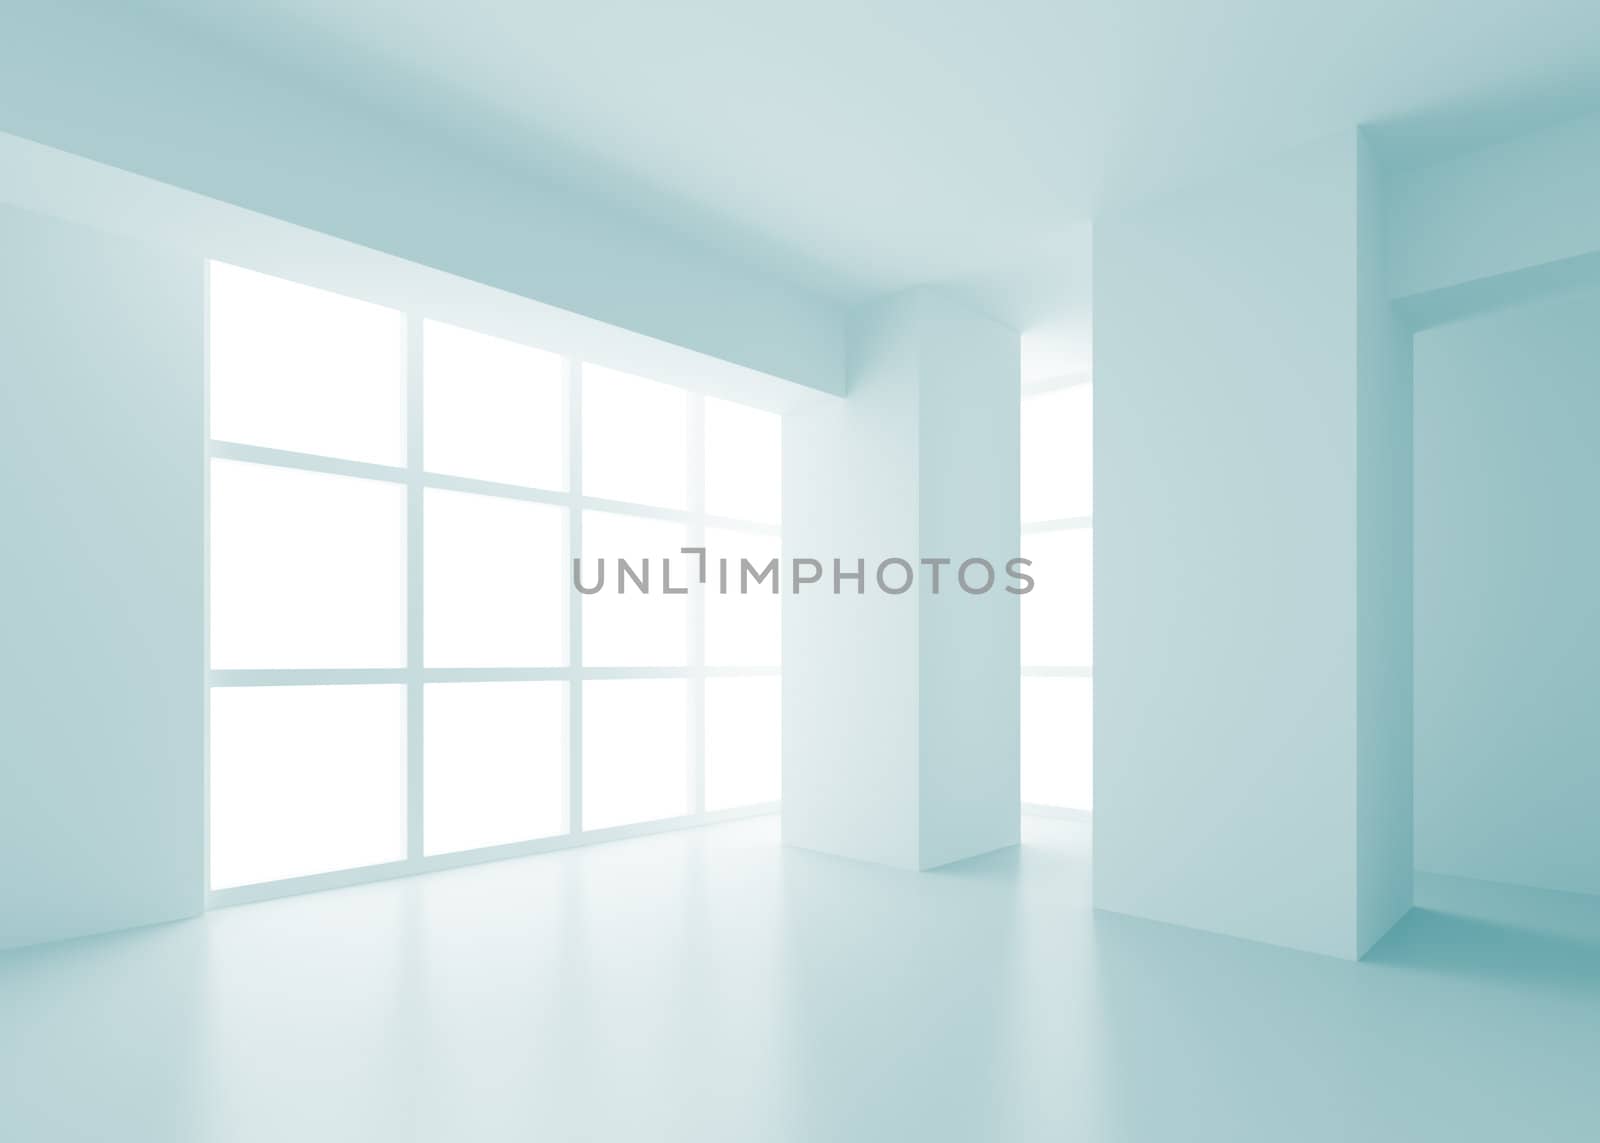 3d Illustration of Blue Abstract Interior Design